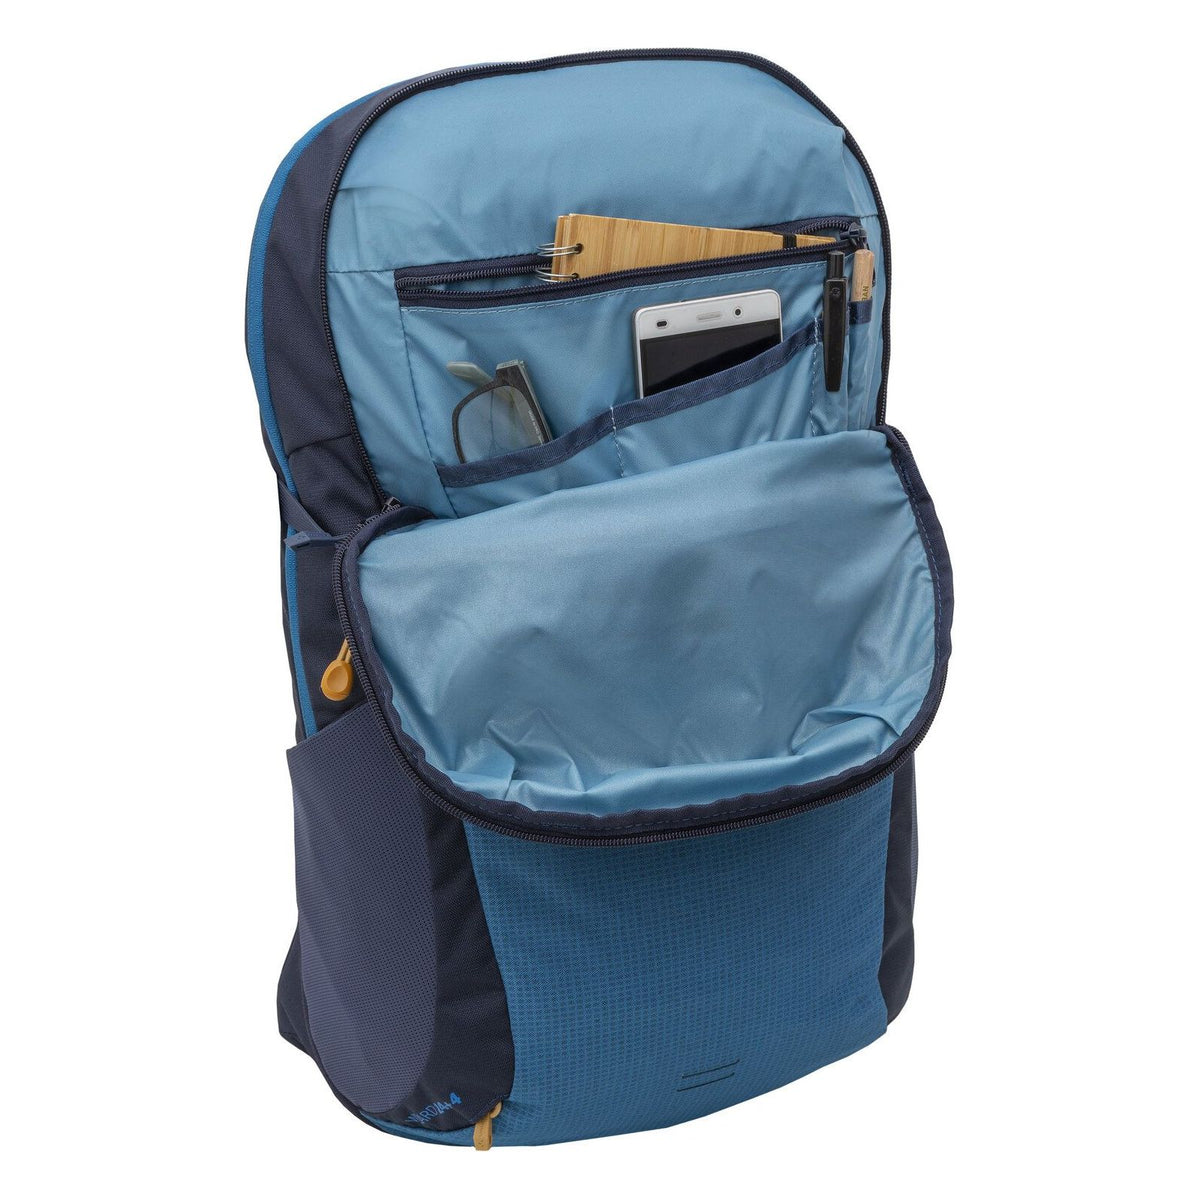 Vaude Wizard 24+4 Hiking Backpack - Kingfisher Blue